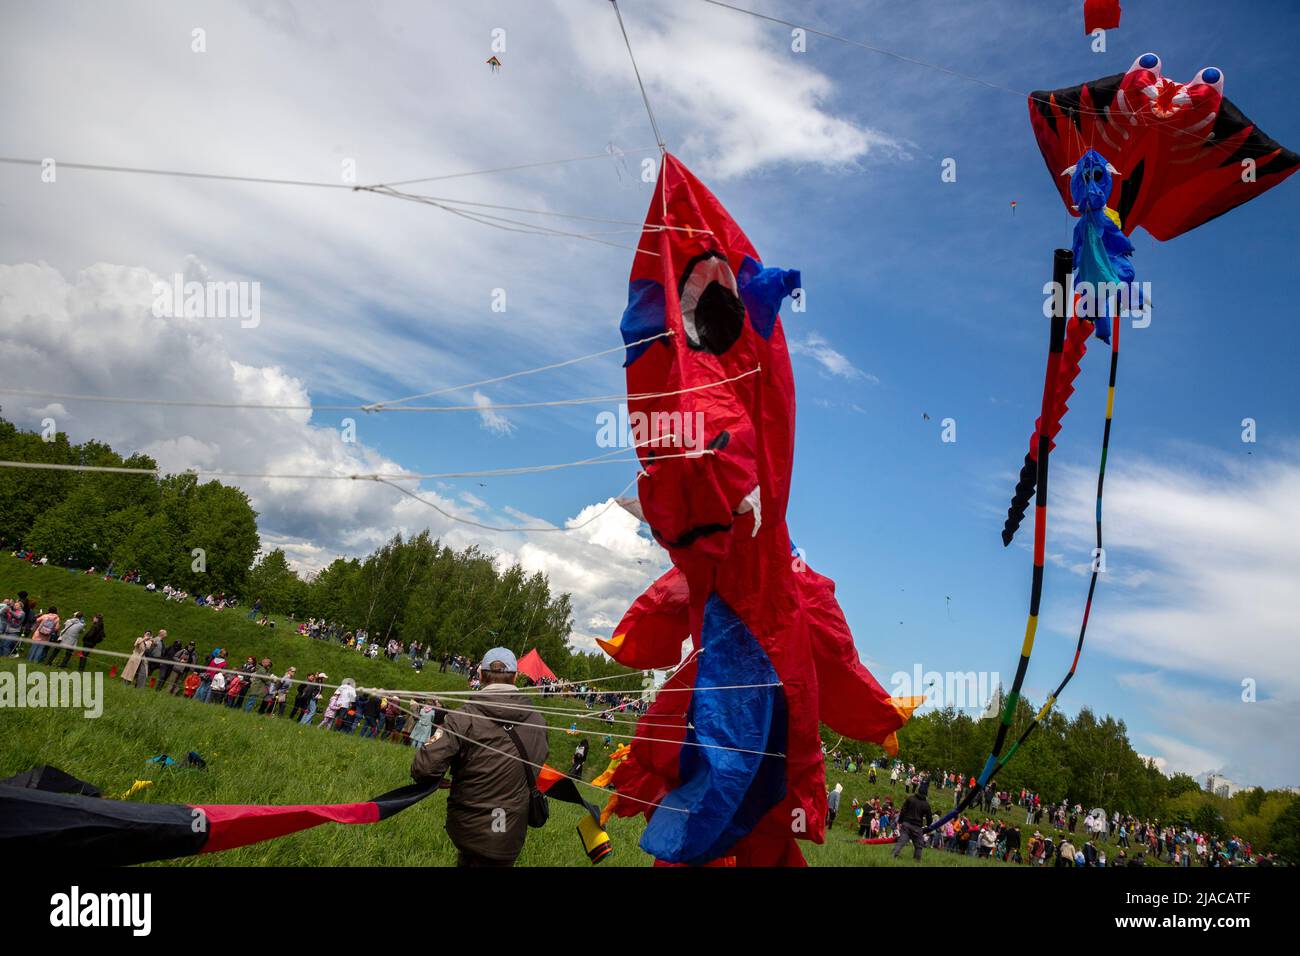 Moskau, Russland. 29.. Mai 2022. Ein Mann fliegt einen Drachen während des Drachenfestes Pyostroye Nebo (eng: Colourful Sky) 2022 im Moskauer Museumsreservat Tsaritsyno, Russland. Nikolay Vinokurov/Alamy Live News Stockfoto